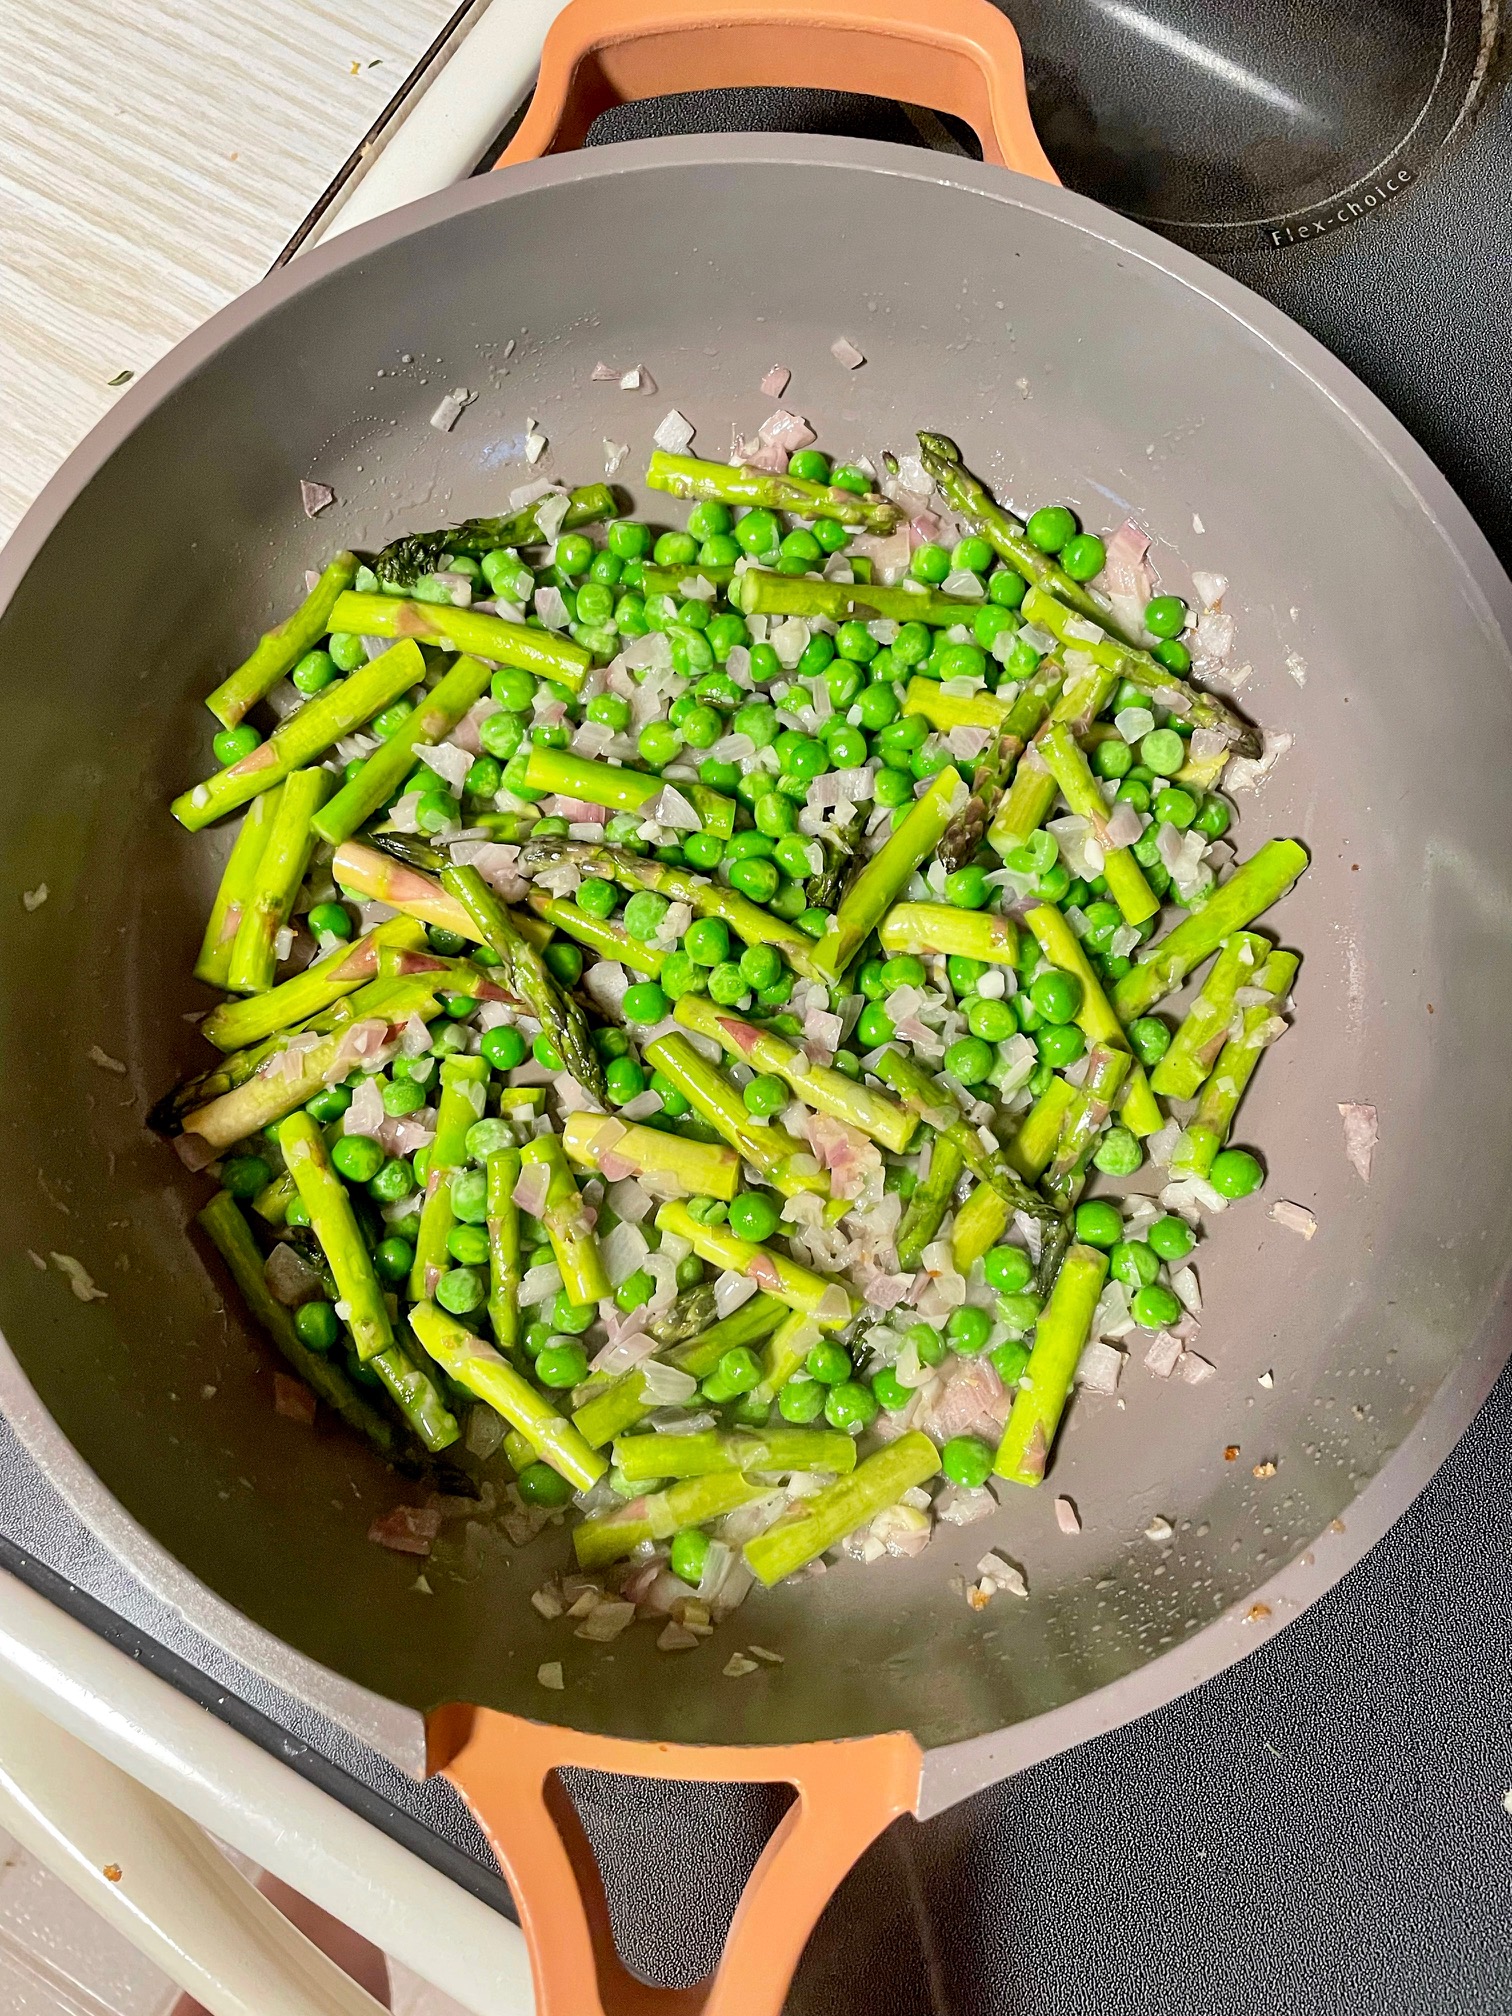 sauteed garlic, shallots, peas and asparagus in a frying pan.